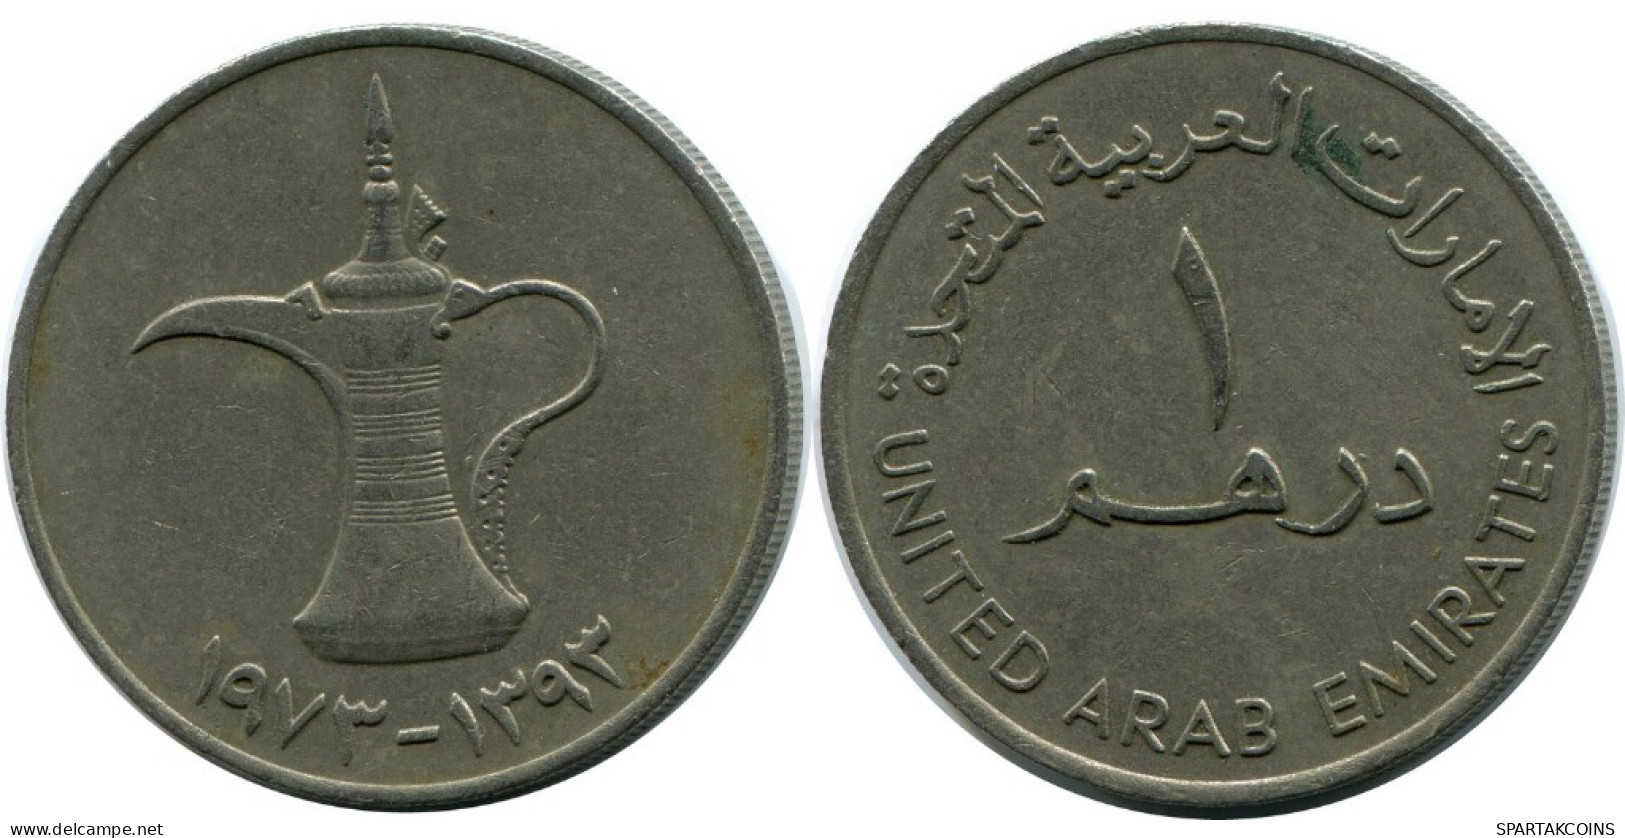 1 DIRHAM 1973 UAE UNITED ARAB EMIRATES Islamic Coin #AH990.U.A - Emirati Arabi